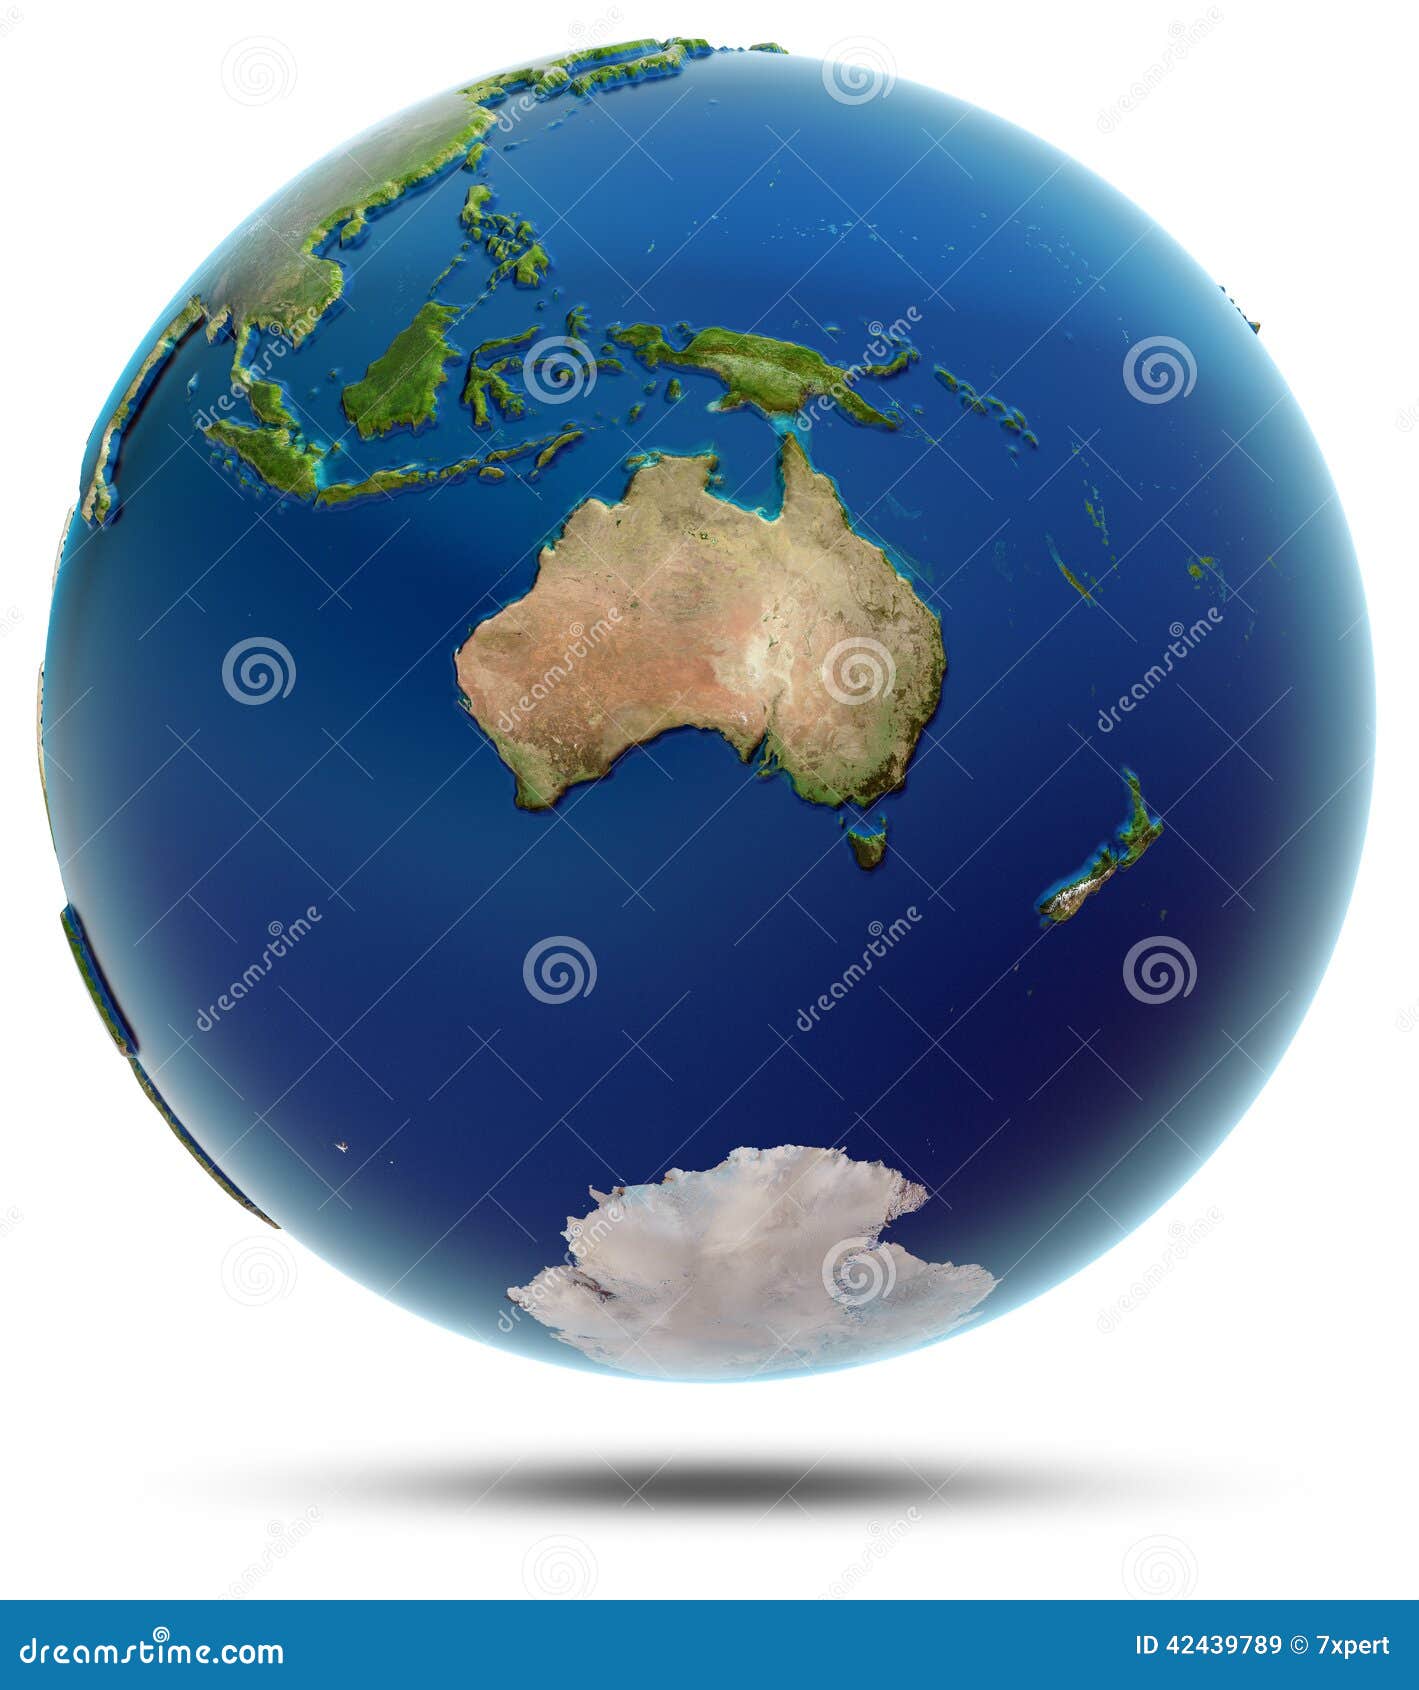 world globe - oceania